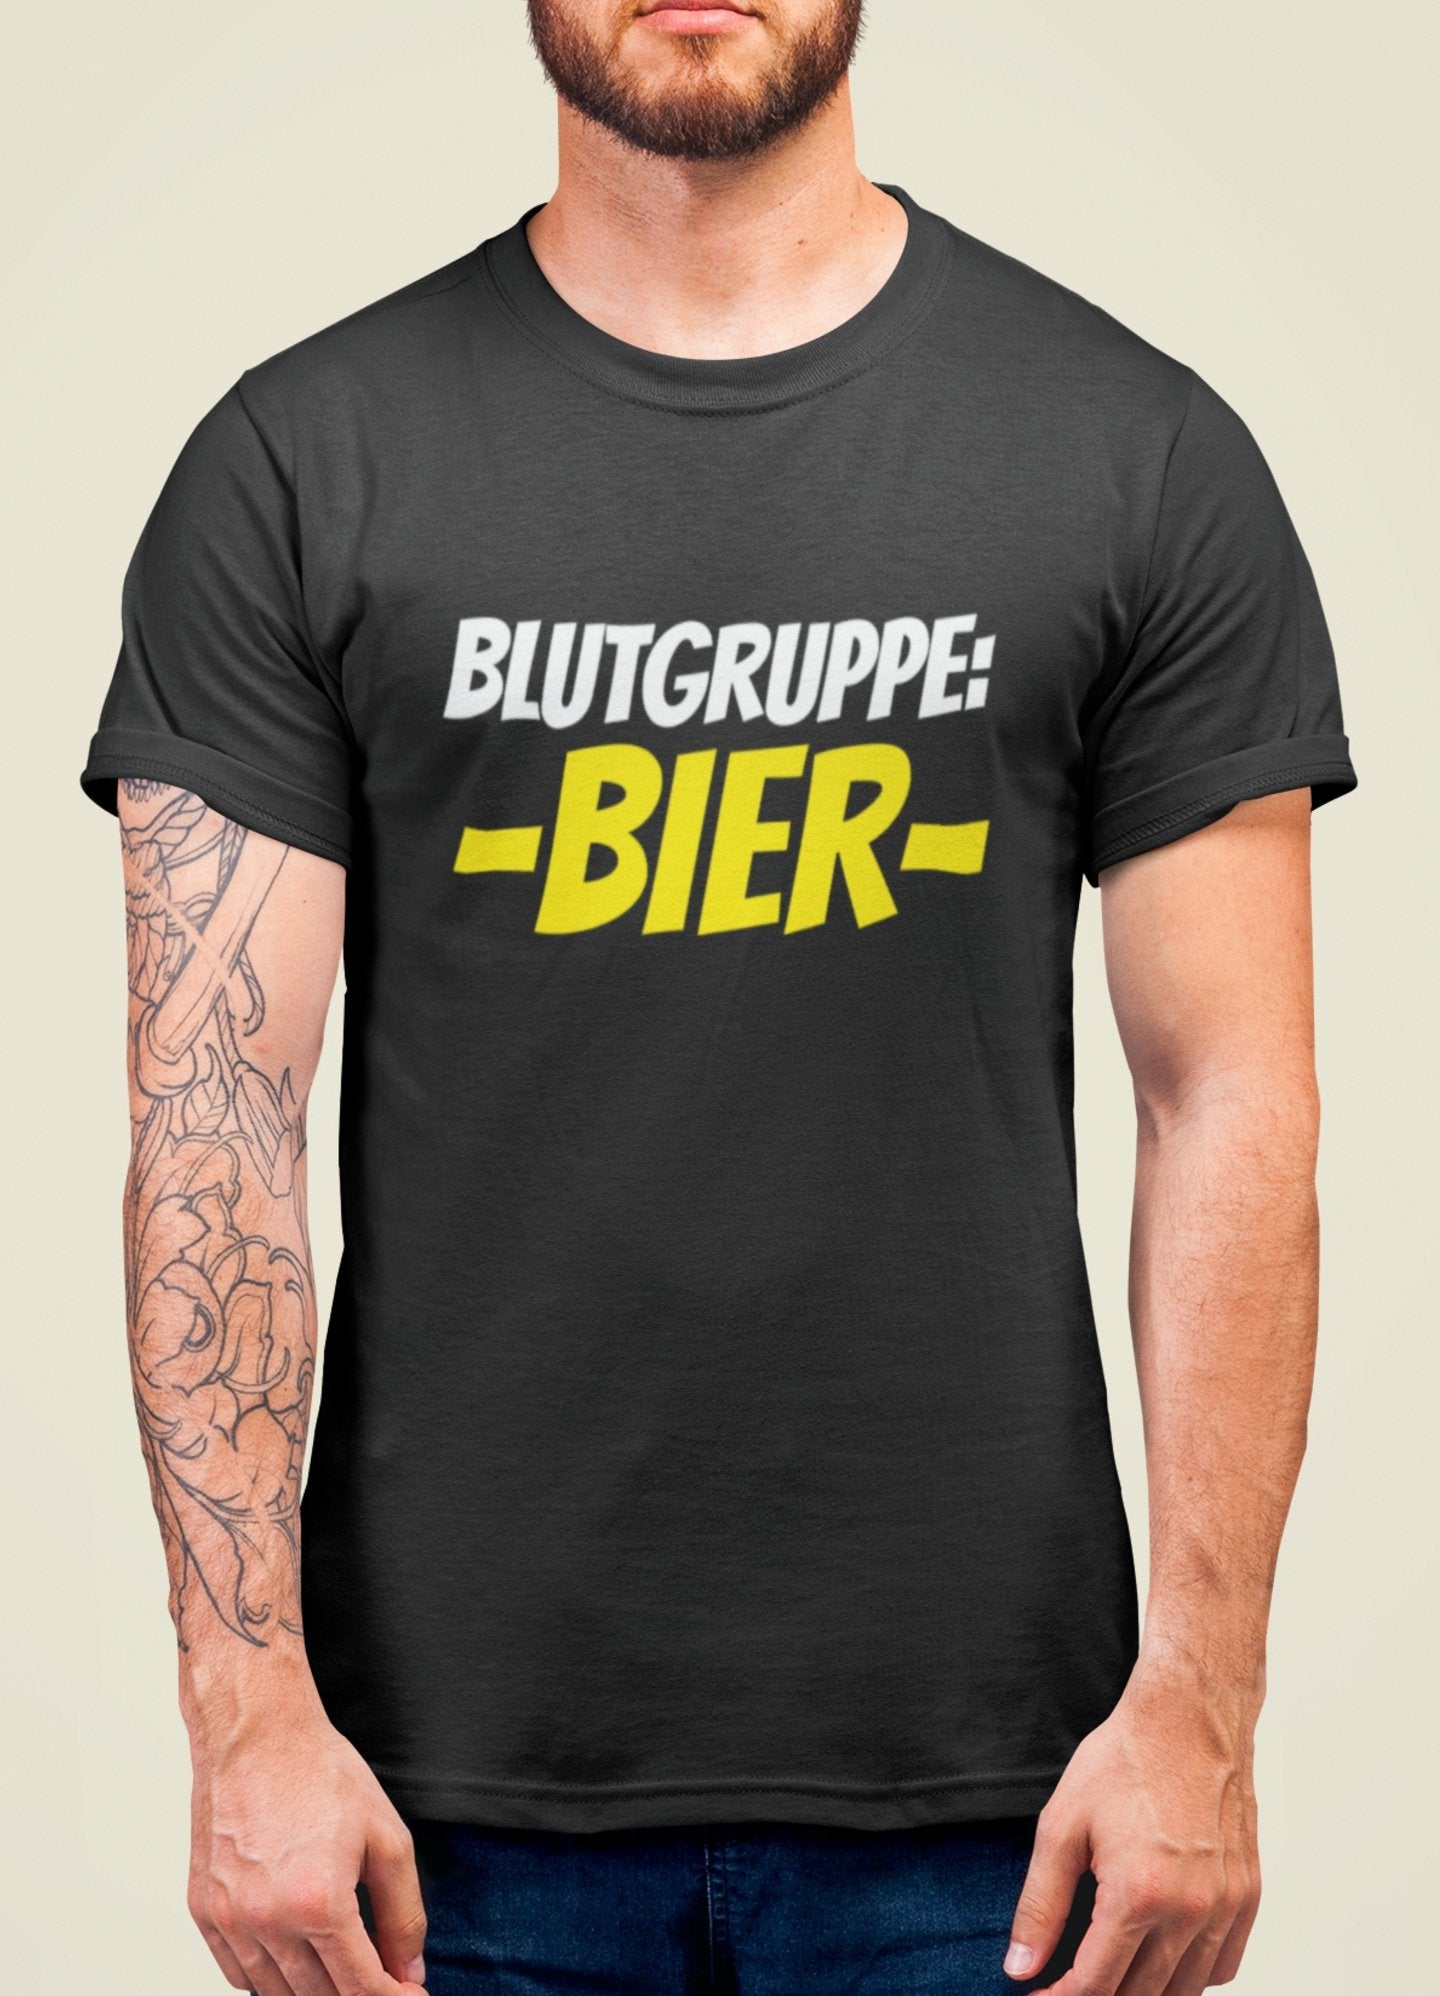 Blutgruppe bier t-shirt lustige shirts funny shirts schwarzes party shirt